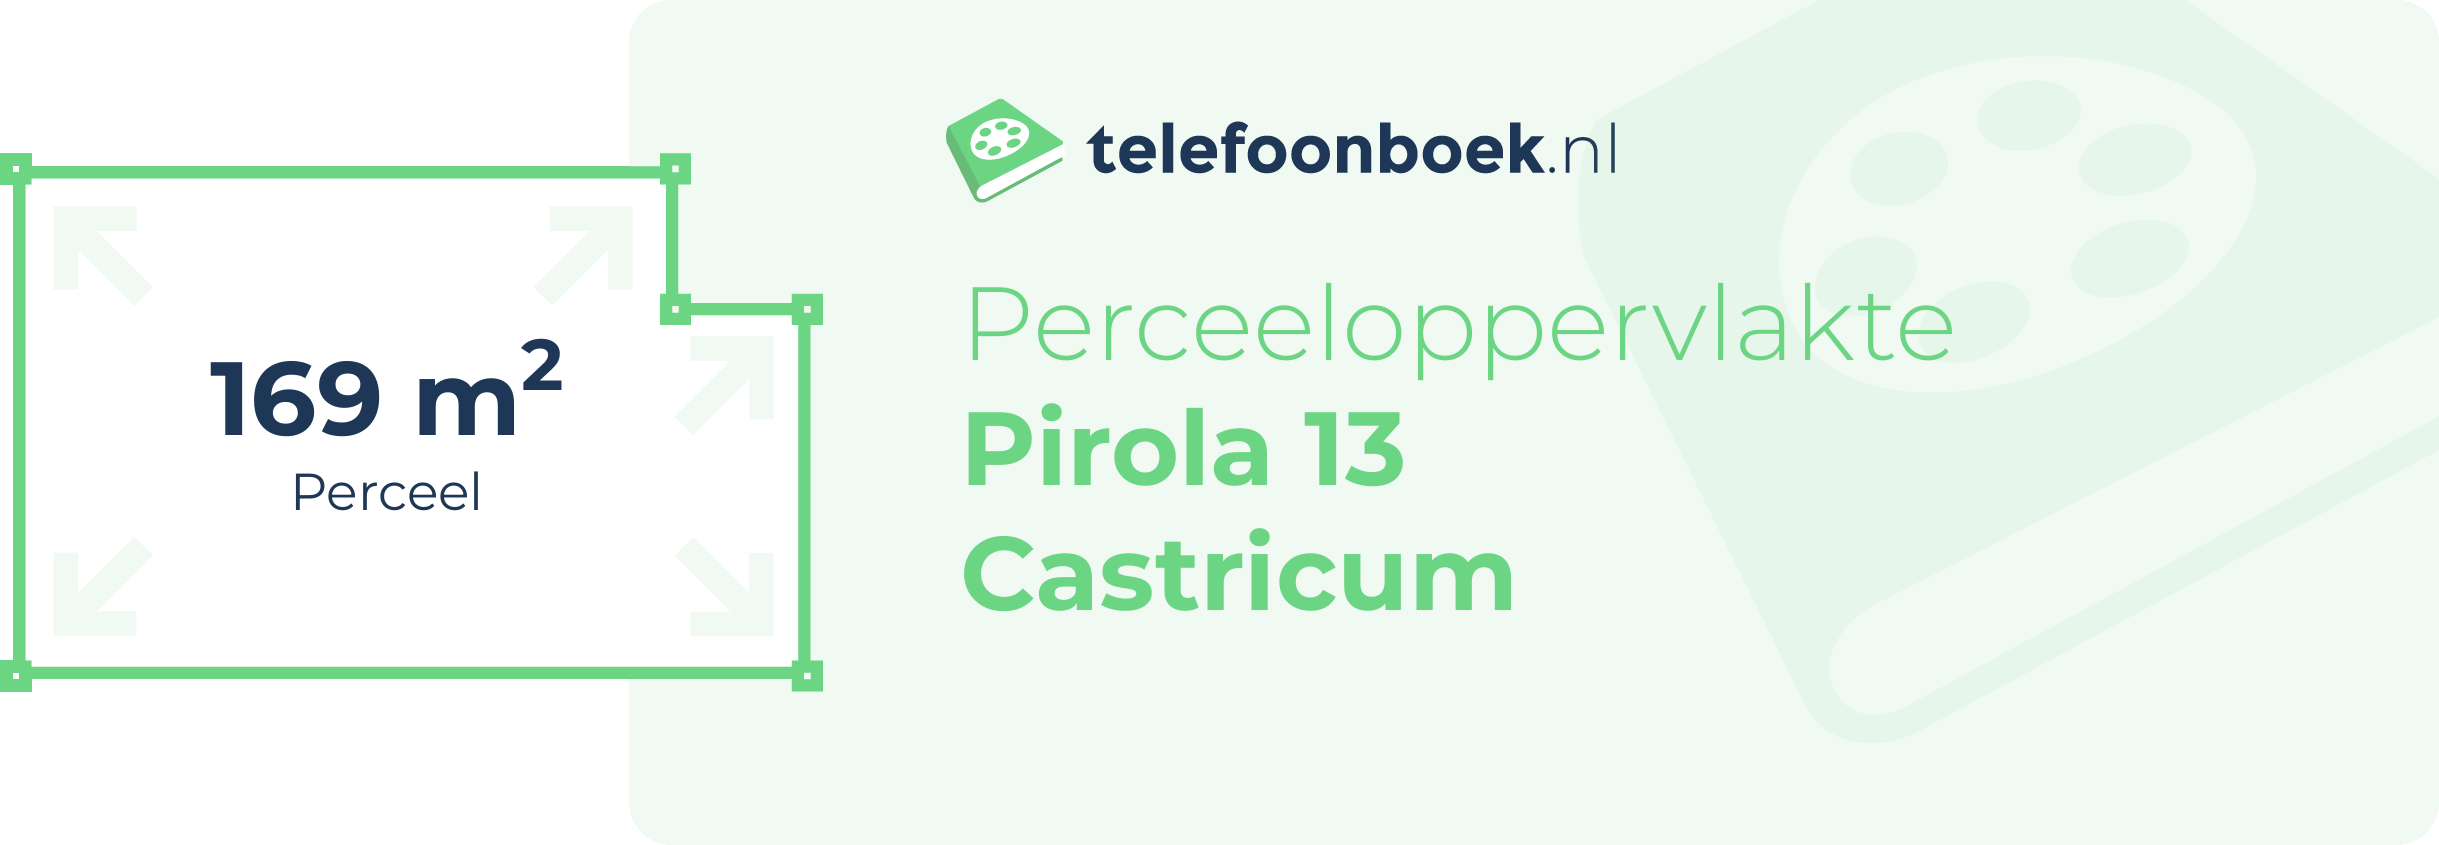 Perceeloppervlakte Pirola 13 Castricum